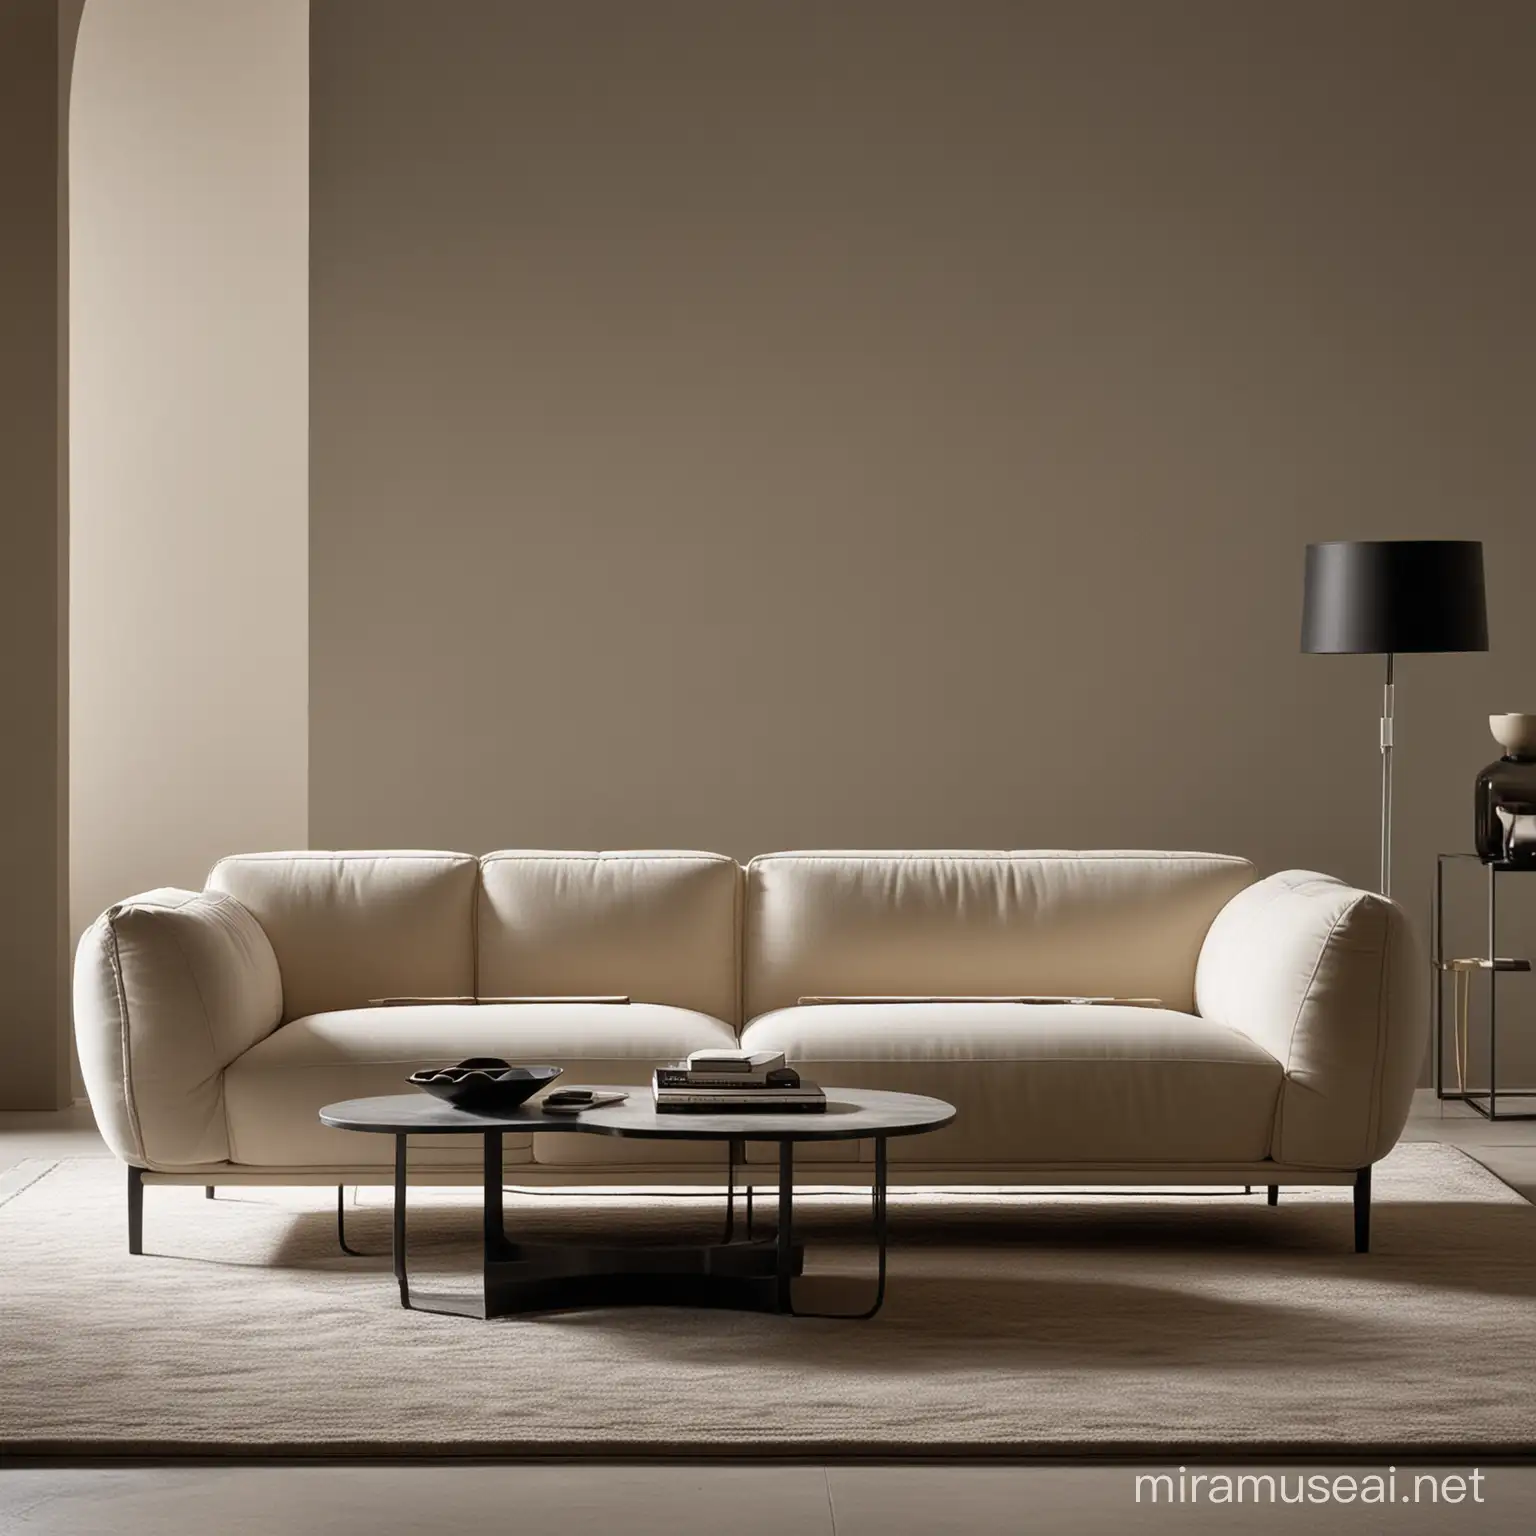 Luxury Contemporary Interior Design with Iconic Furniture Brands